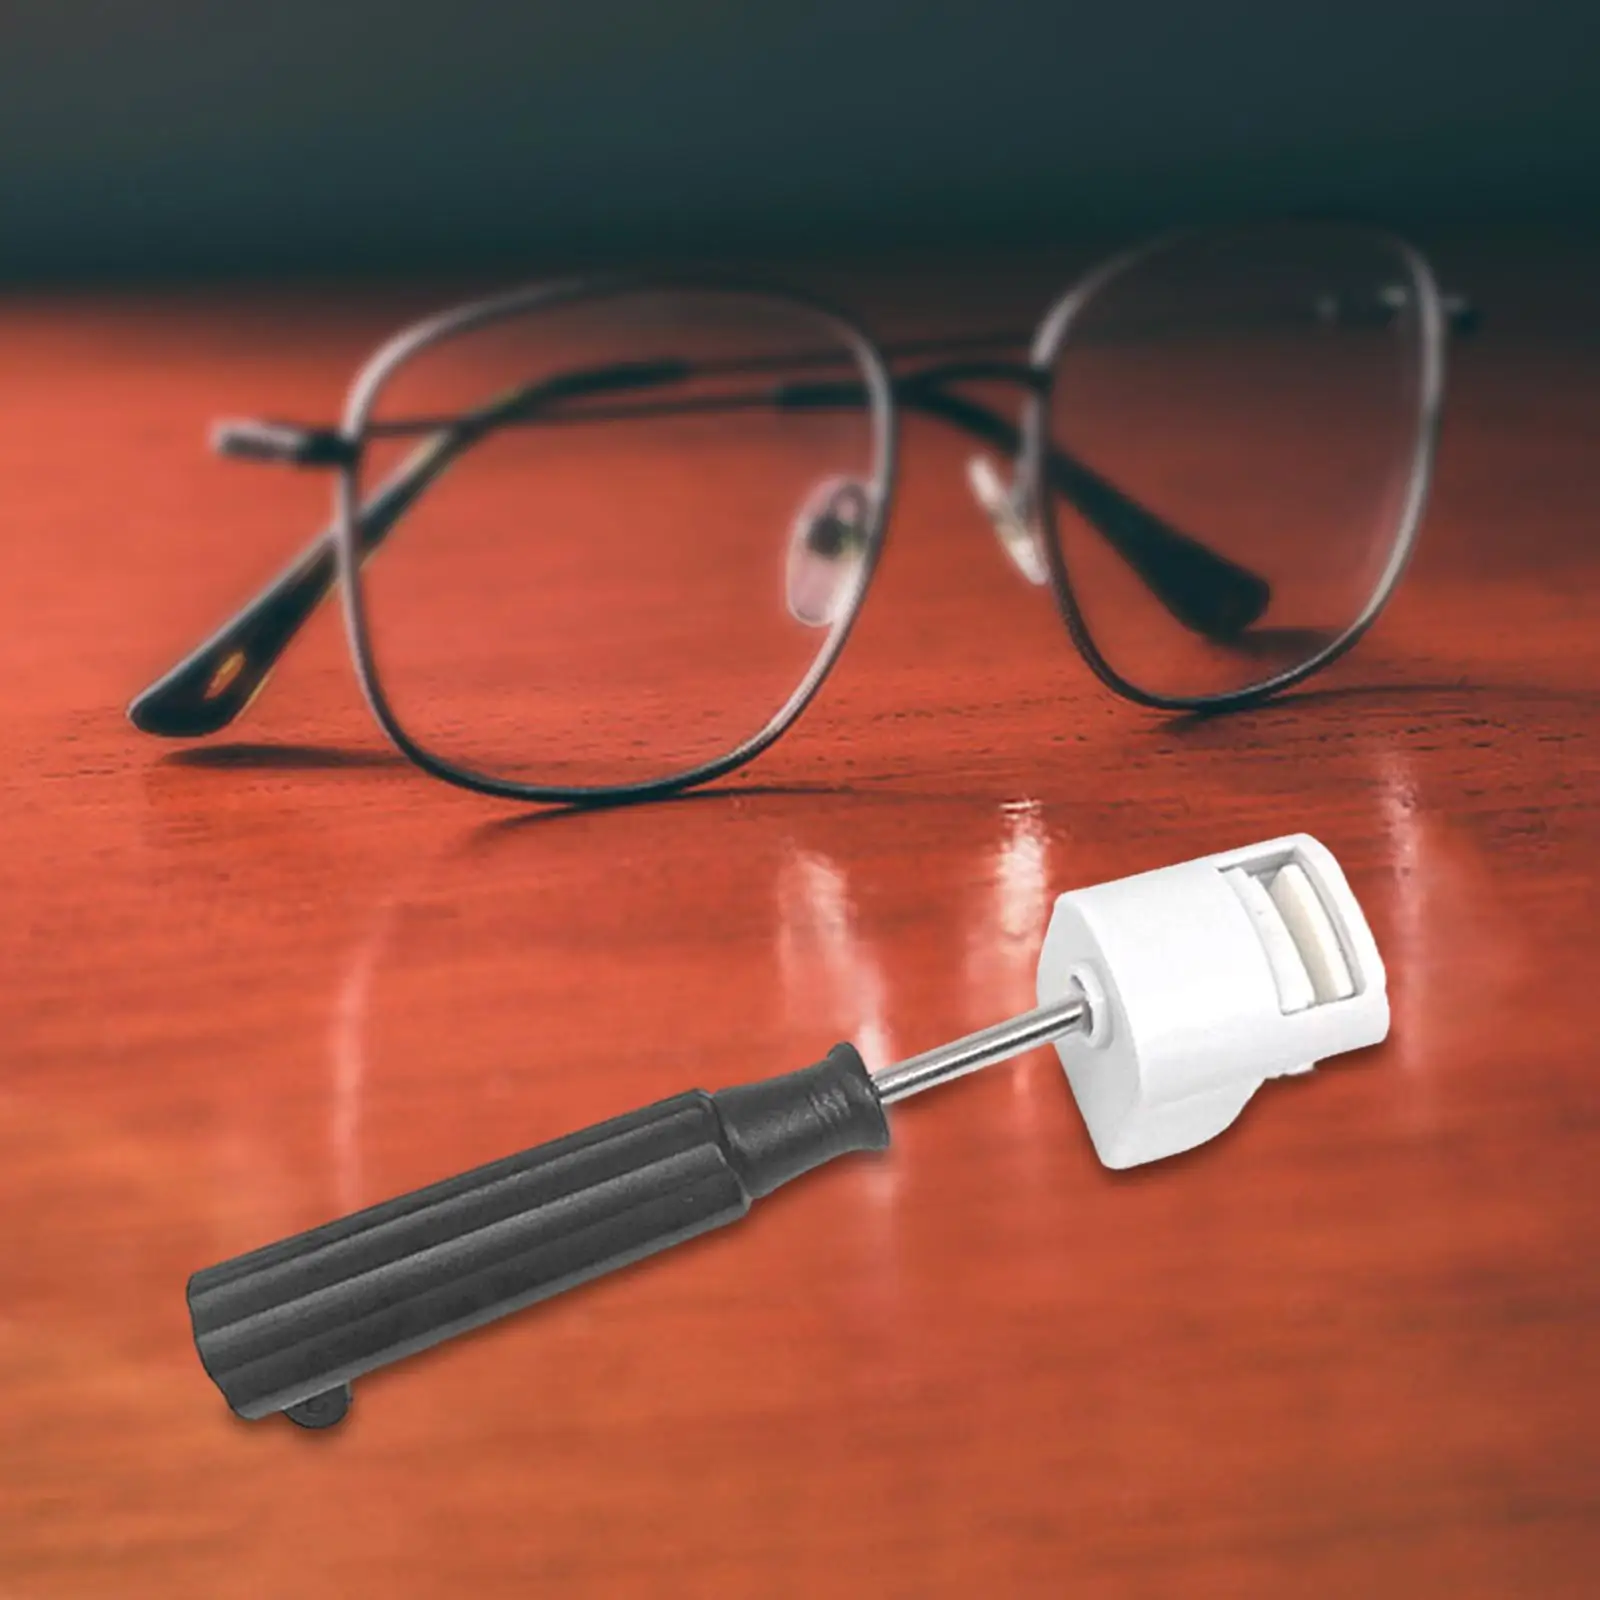 Glasses Screwdriver Small Screwdriver 9mm Disassembly Sunglasses Triangle Screwdriver Fix Glasses Frame Eyeglass Repairing